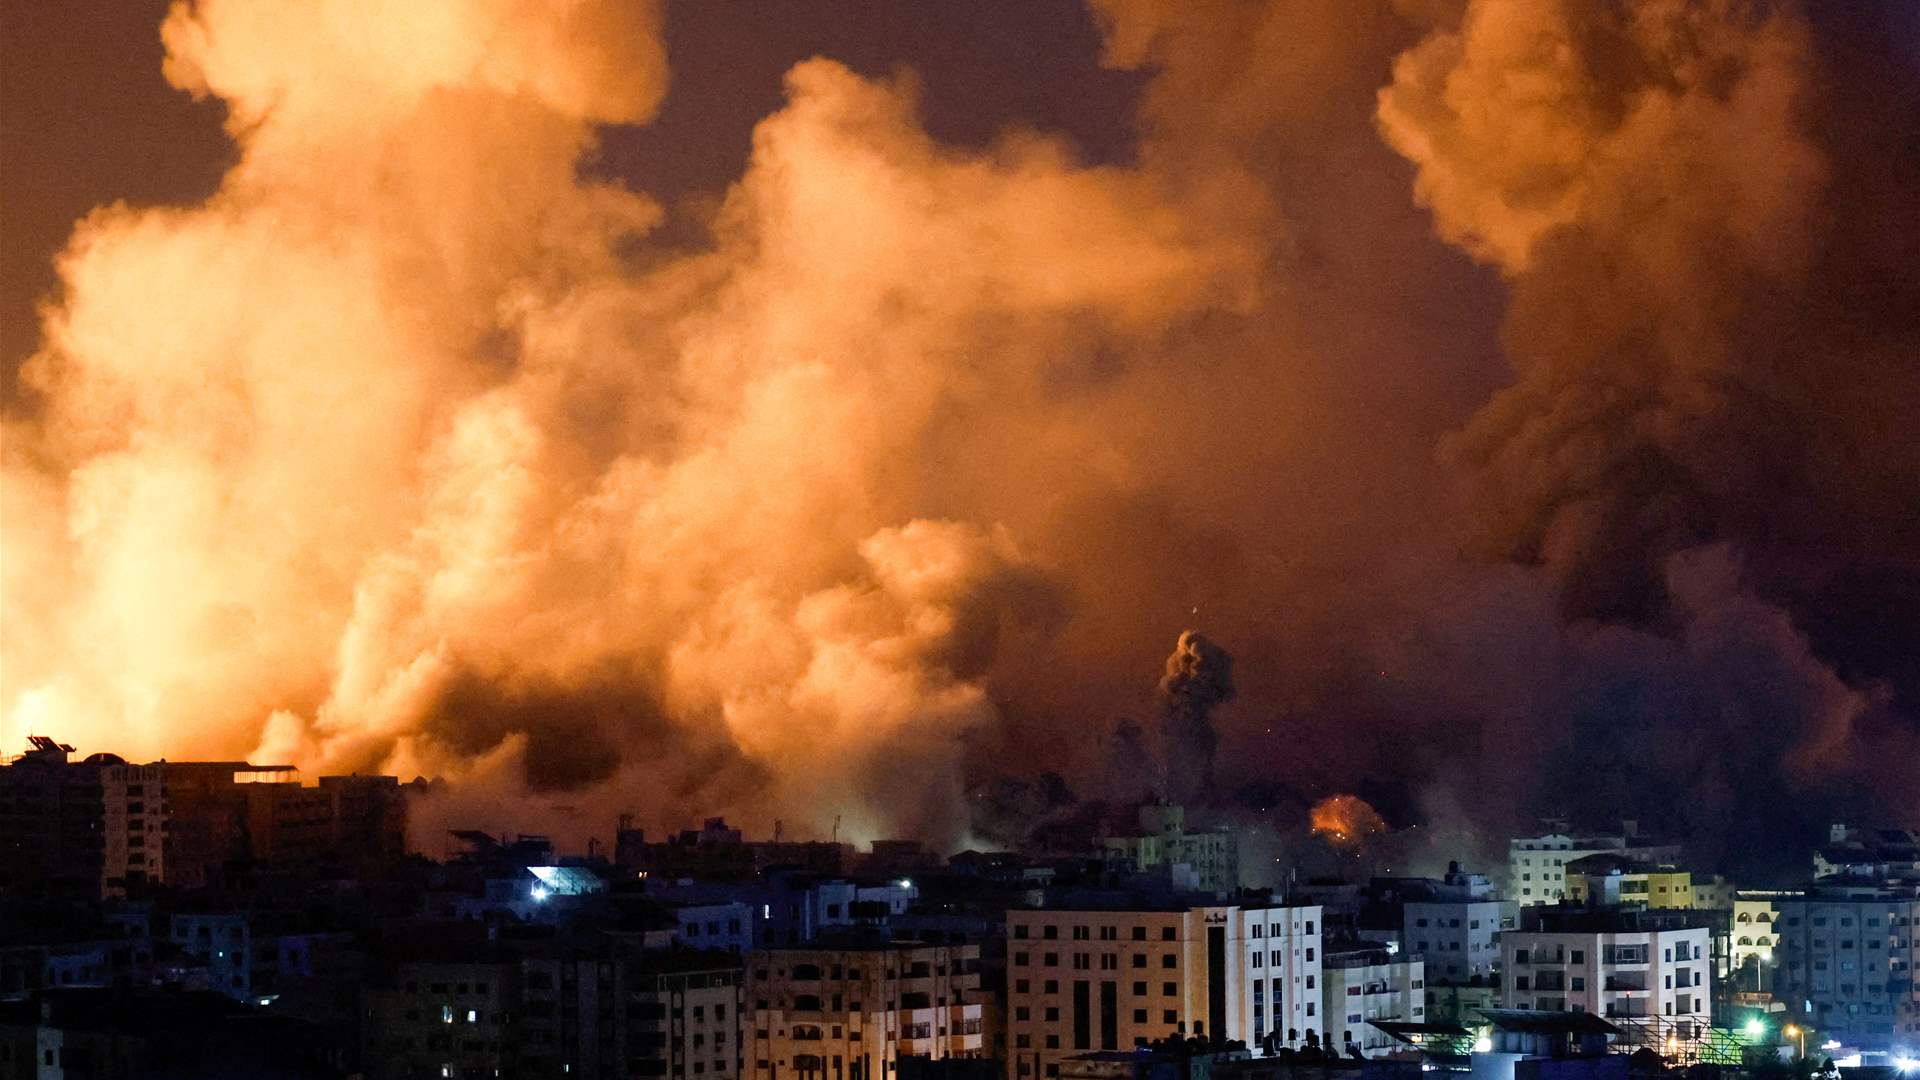 Developments on Gaza frontlines: Israeli forces advance amid shelling